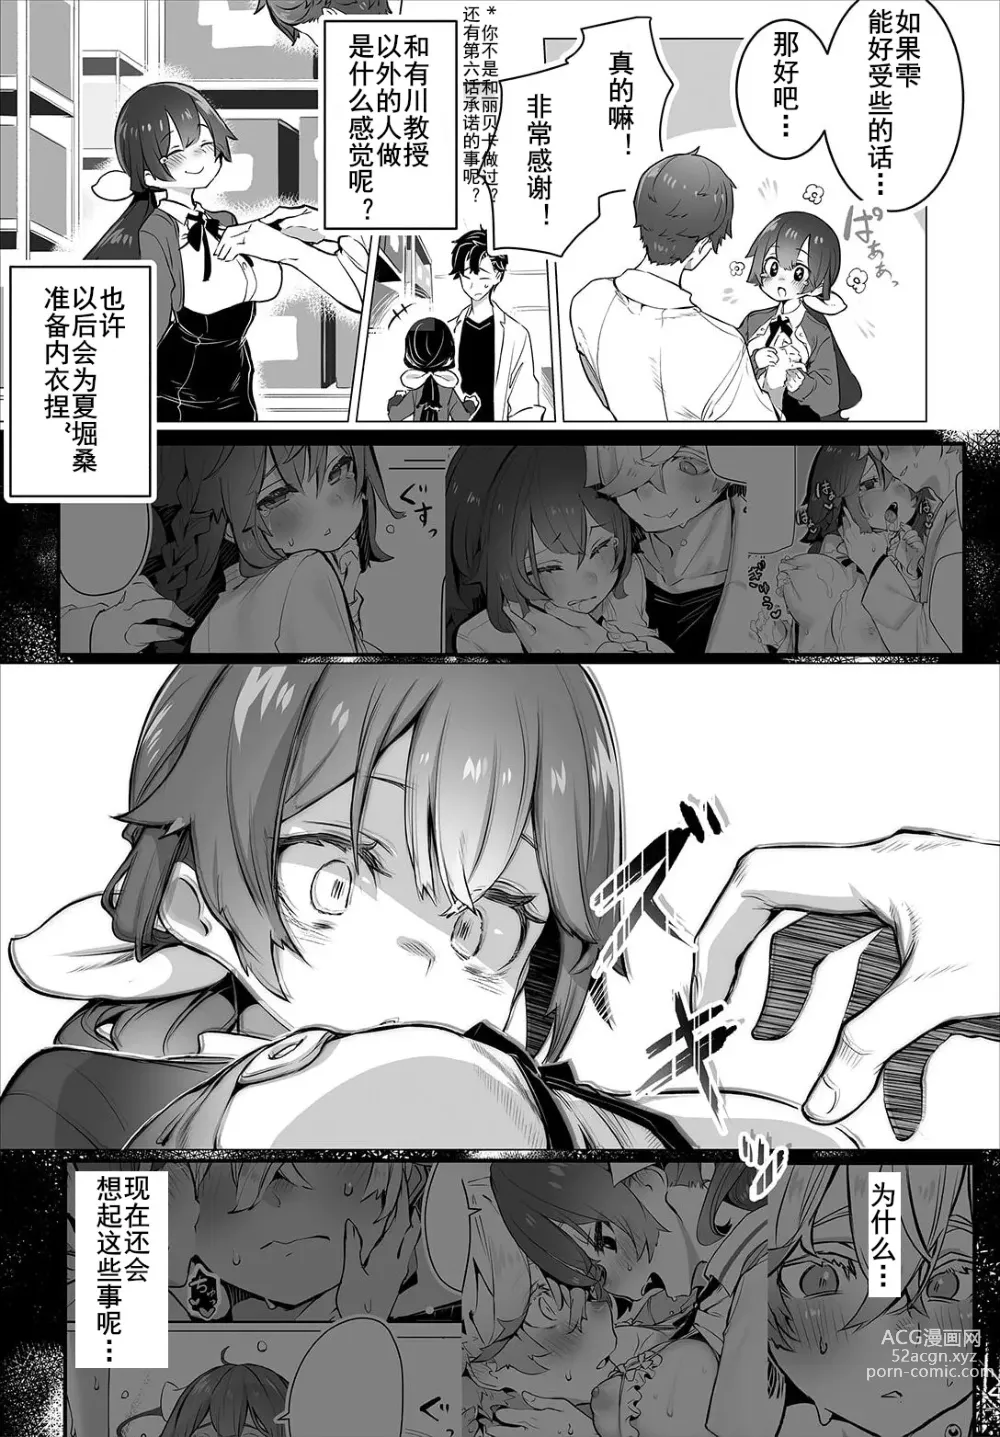 Page 9 of manga 东京黑匣子-抖S教授的疑案报告 11